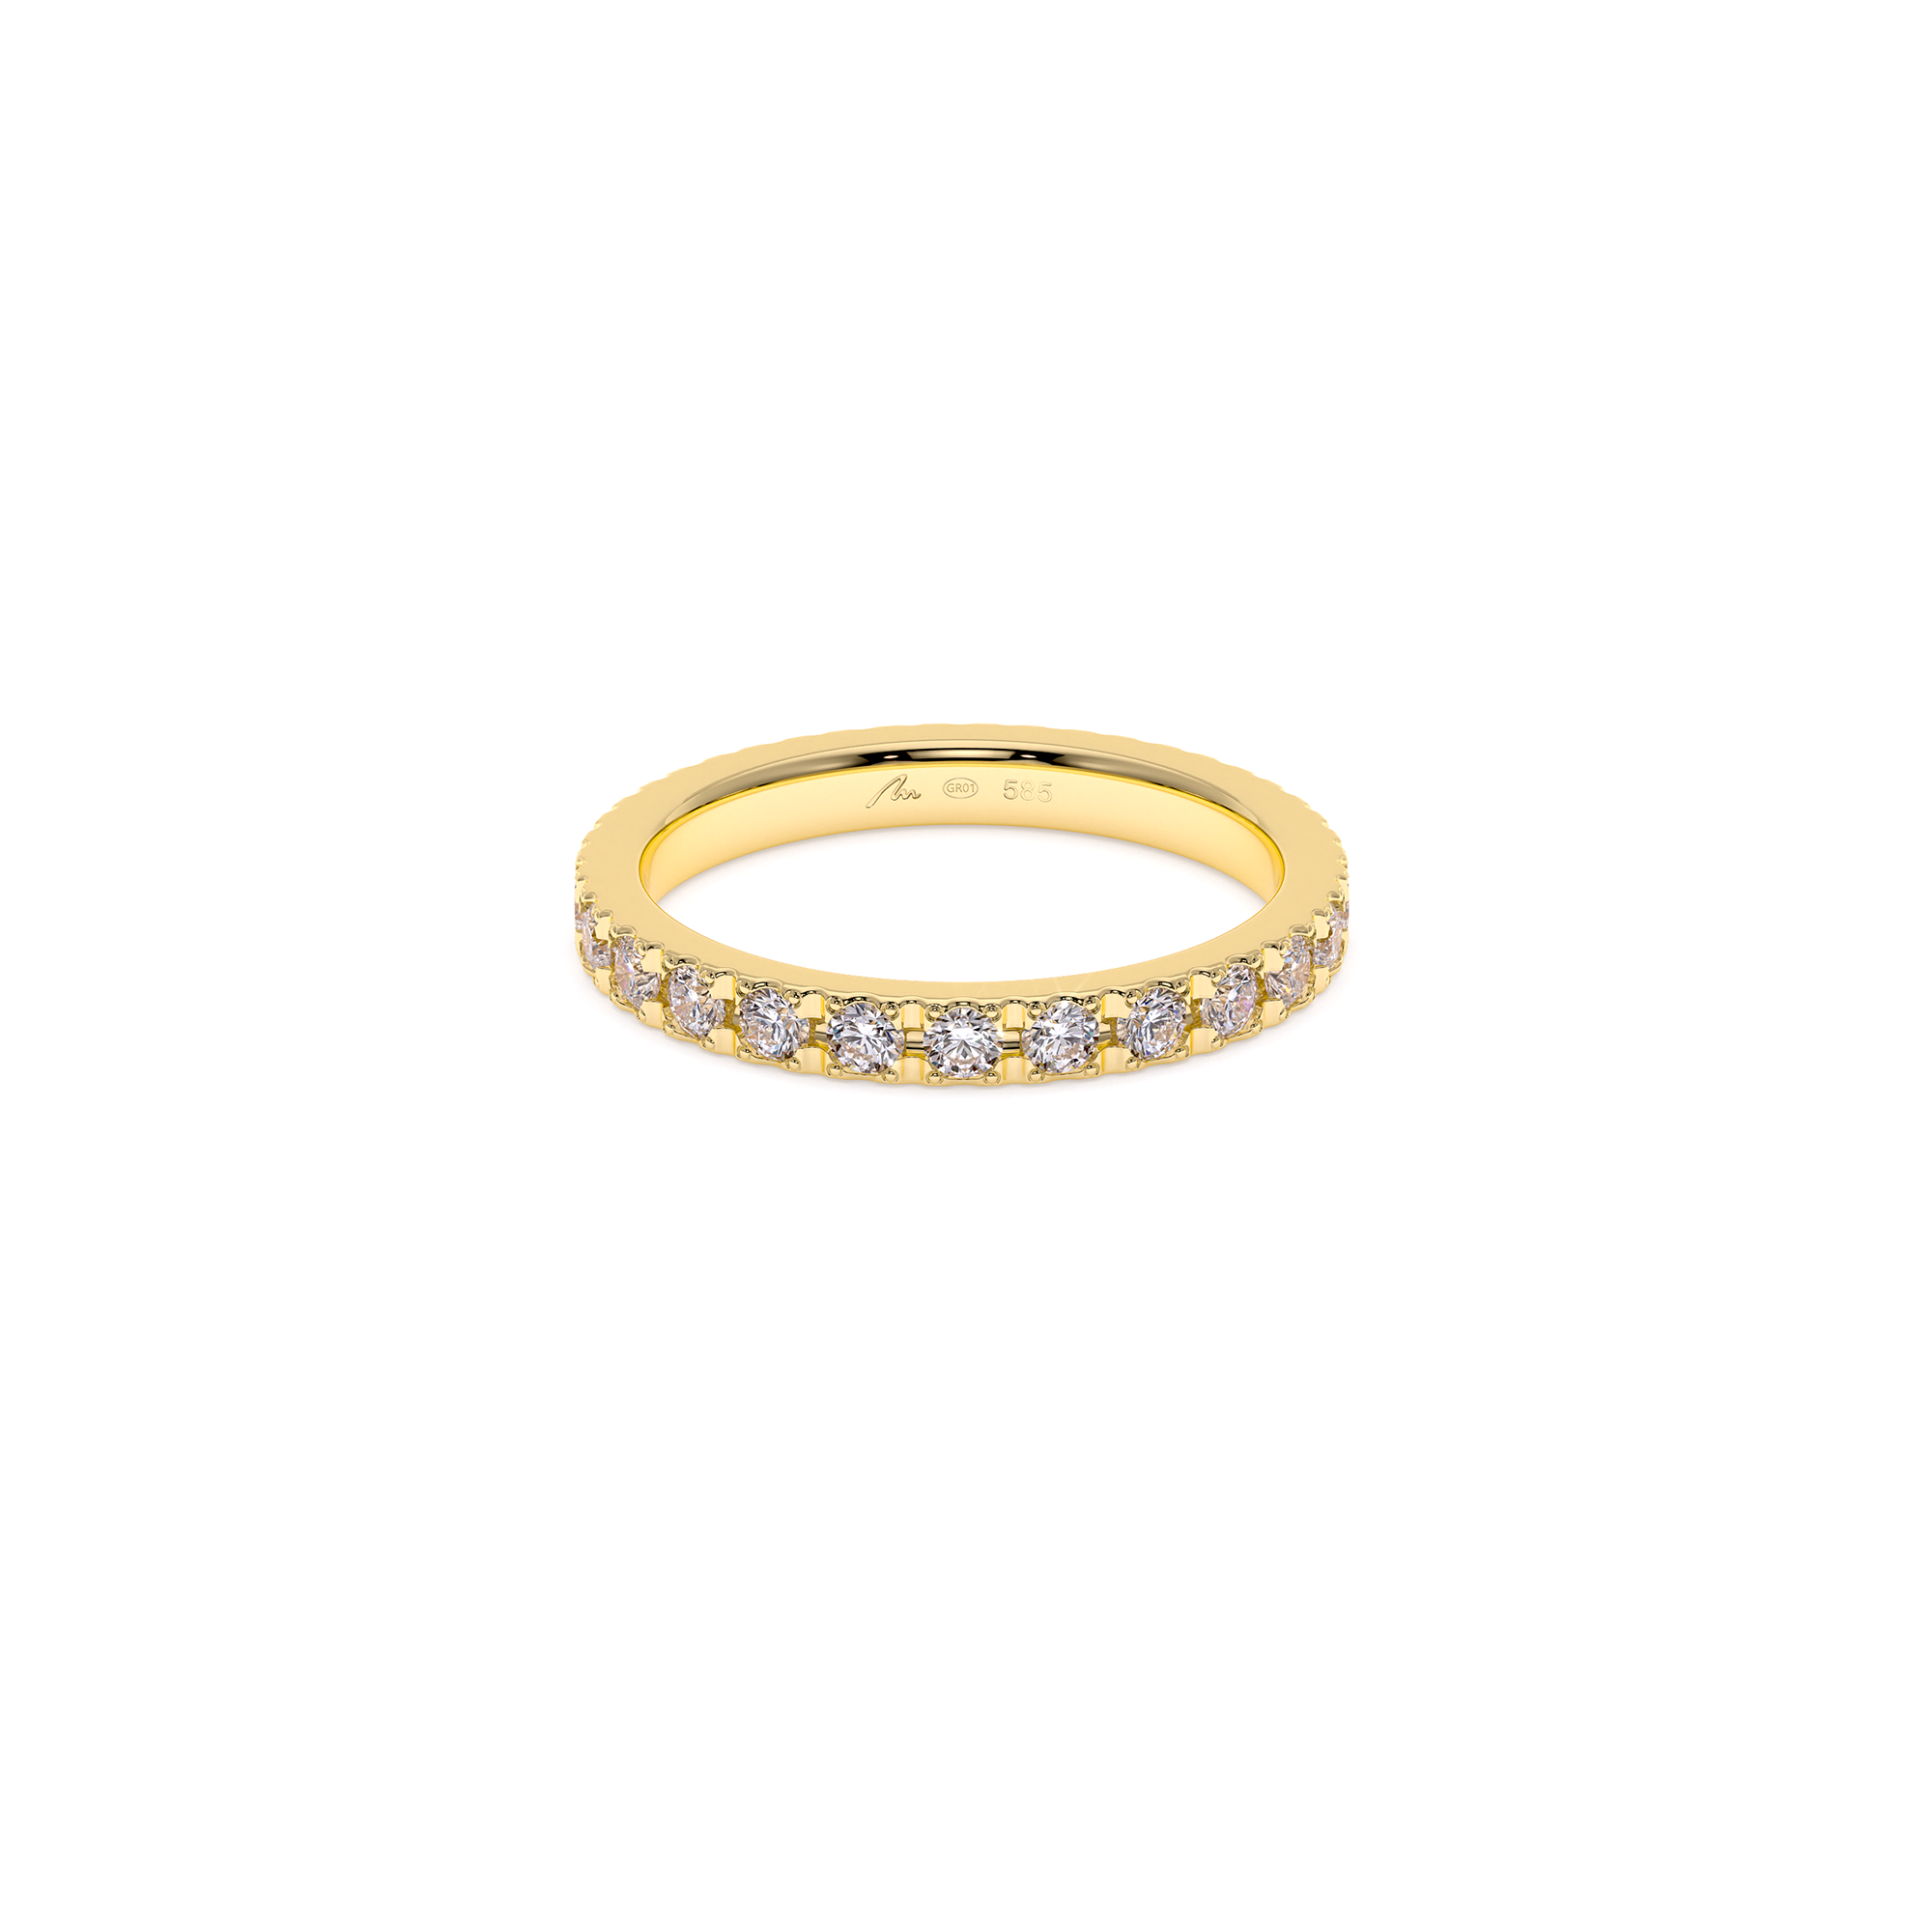 14 k yellow gold Tennis ring with 0.84 CT white diamonds